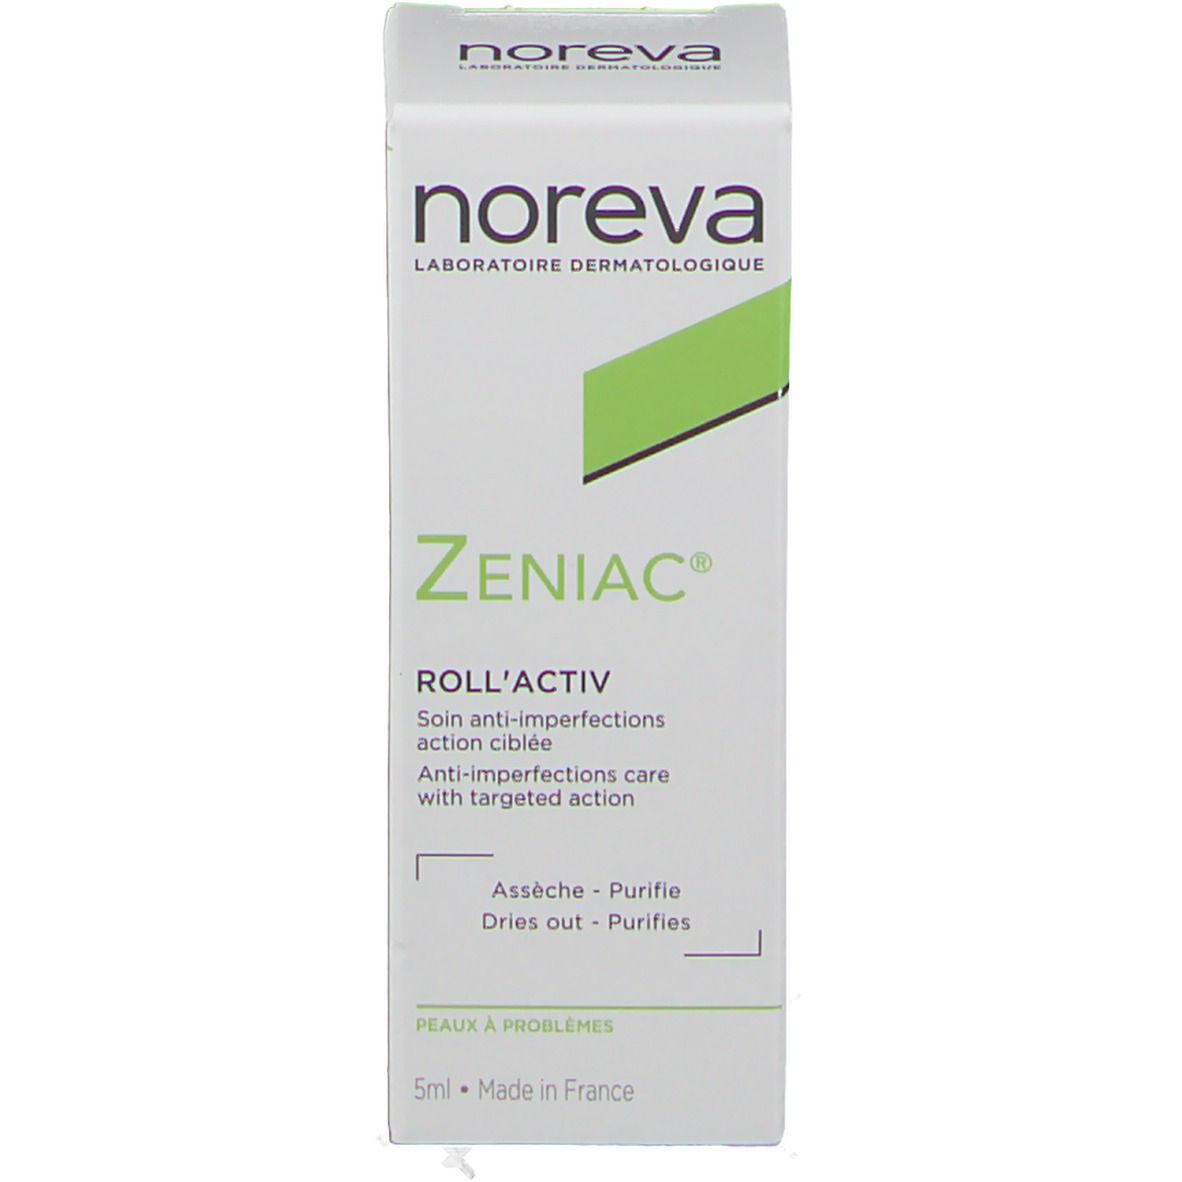 noreva Zeniac® Roll Activ